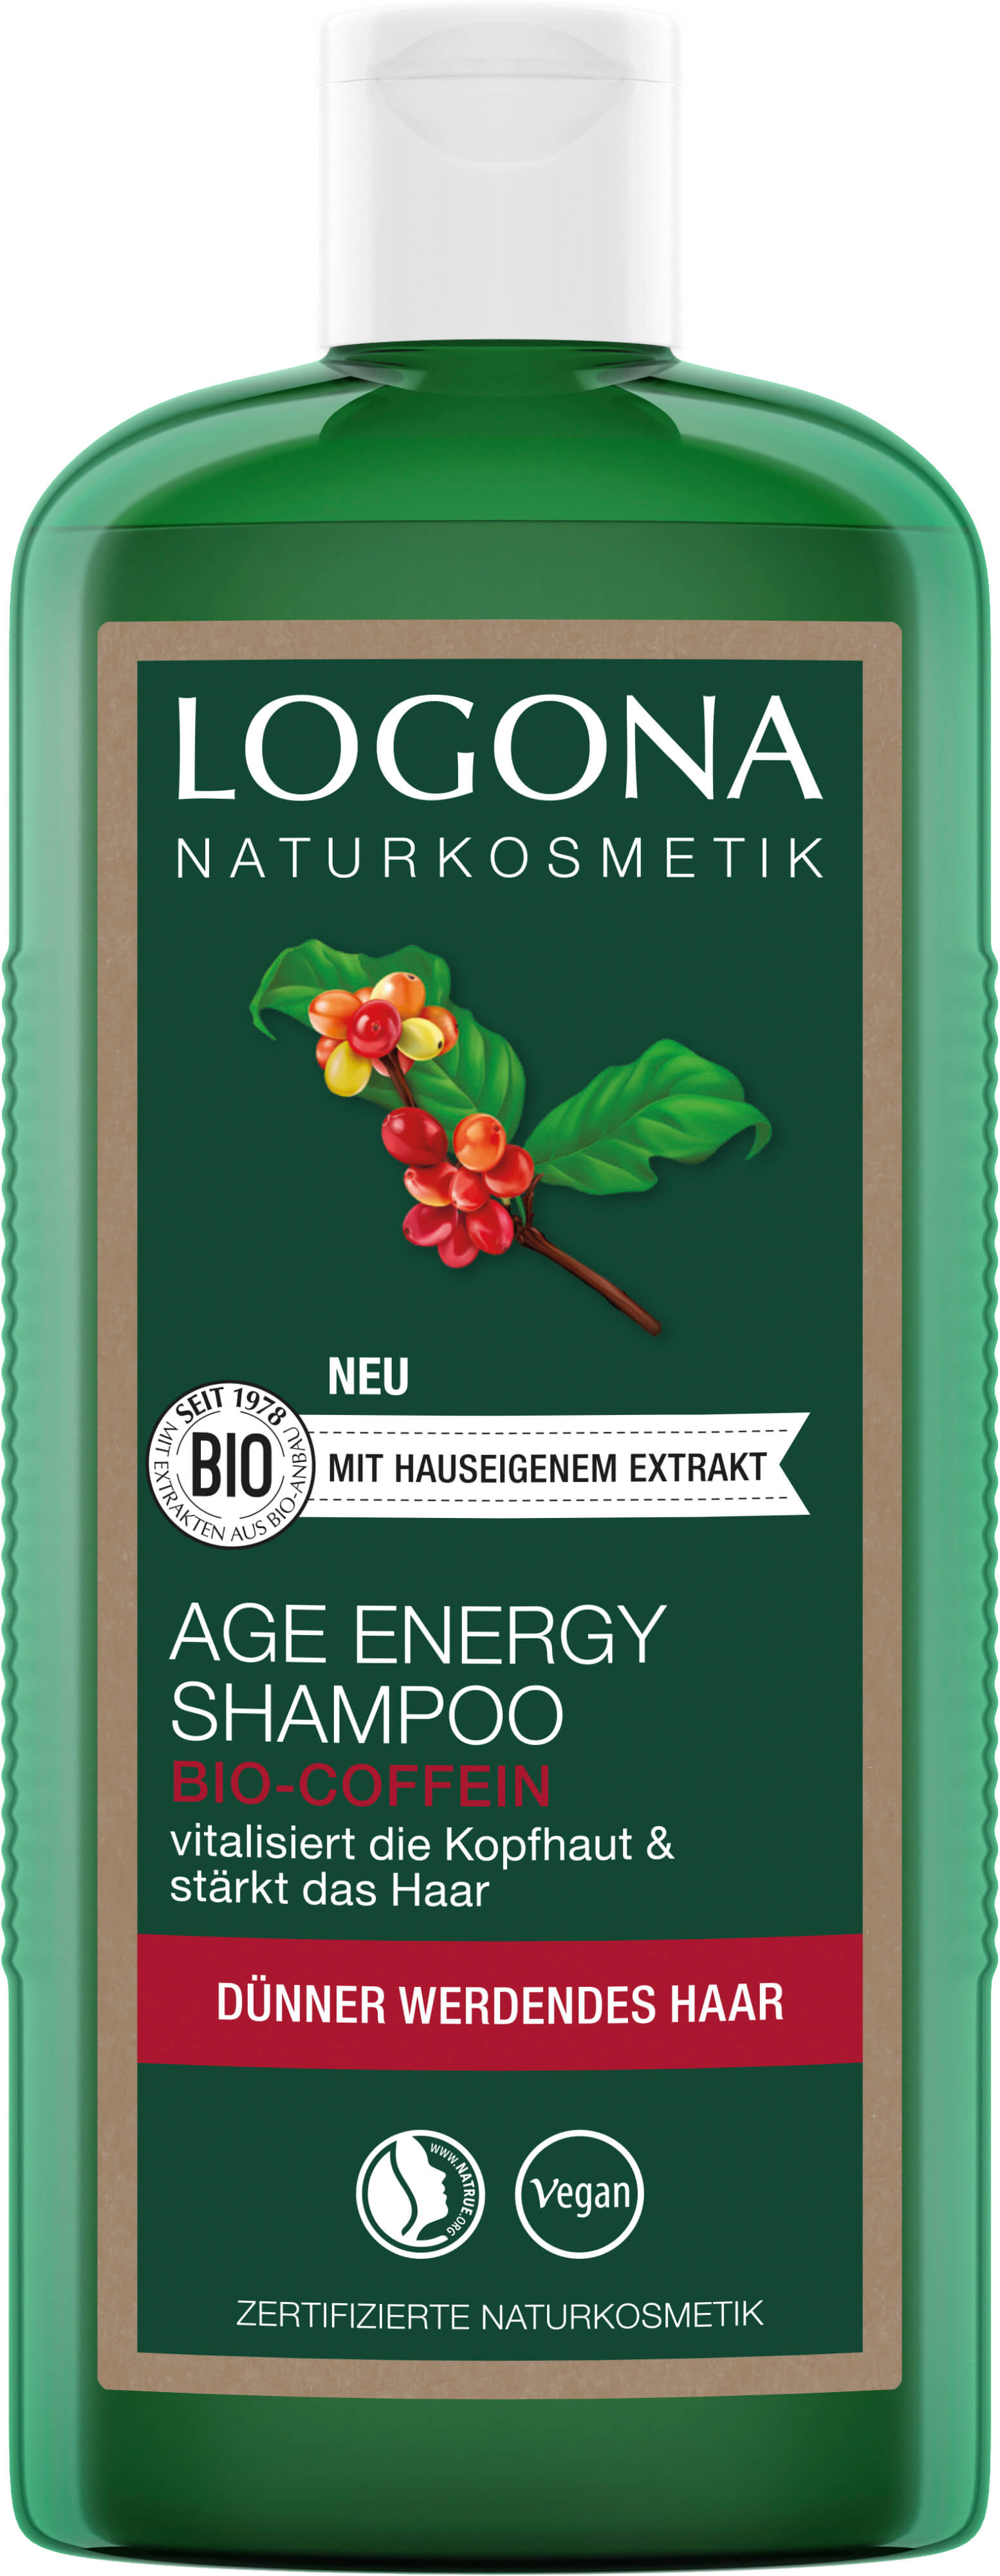 | LOGONA Bio-Coffein Shampoo Age Energy Naturkosmetik